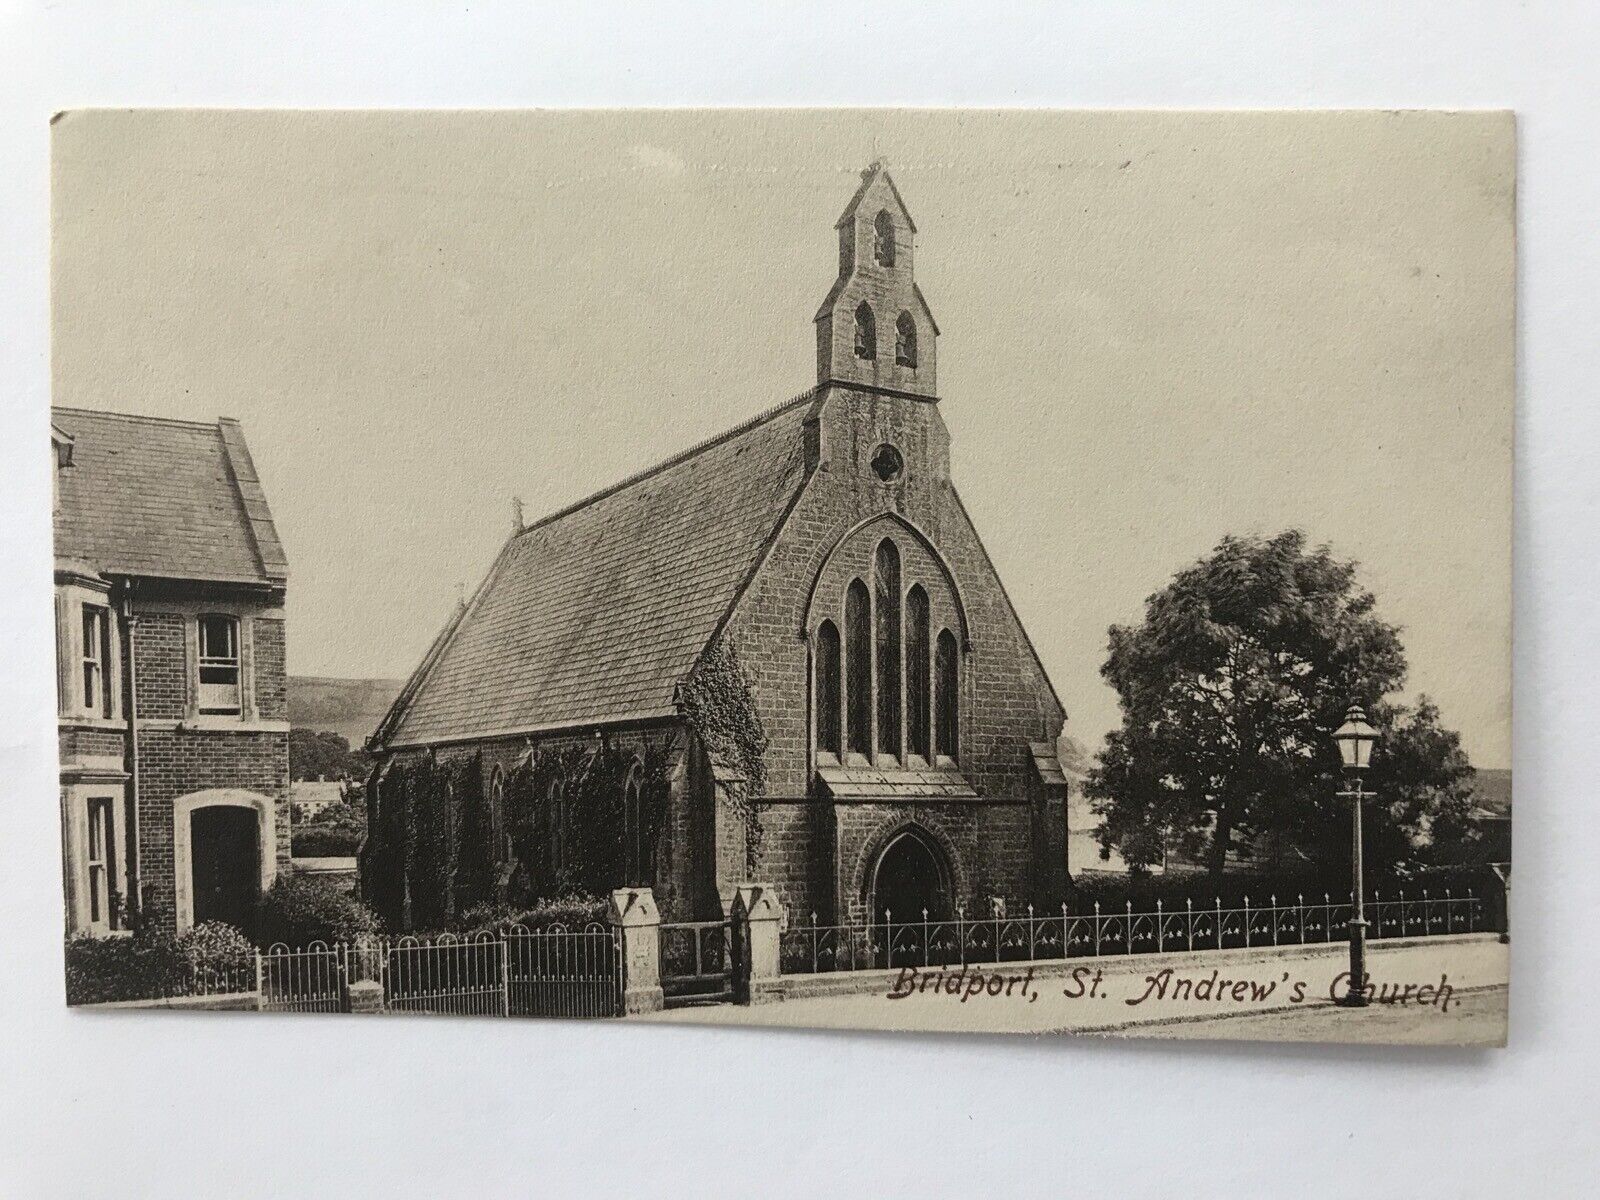 Bridport, St. Andrew’s Church. Postcard. 